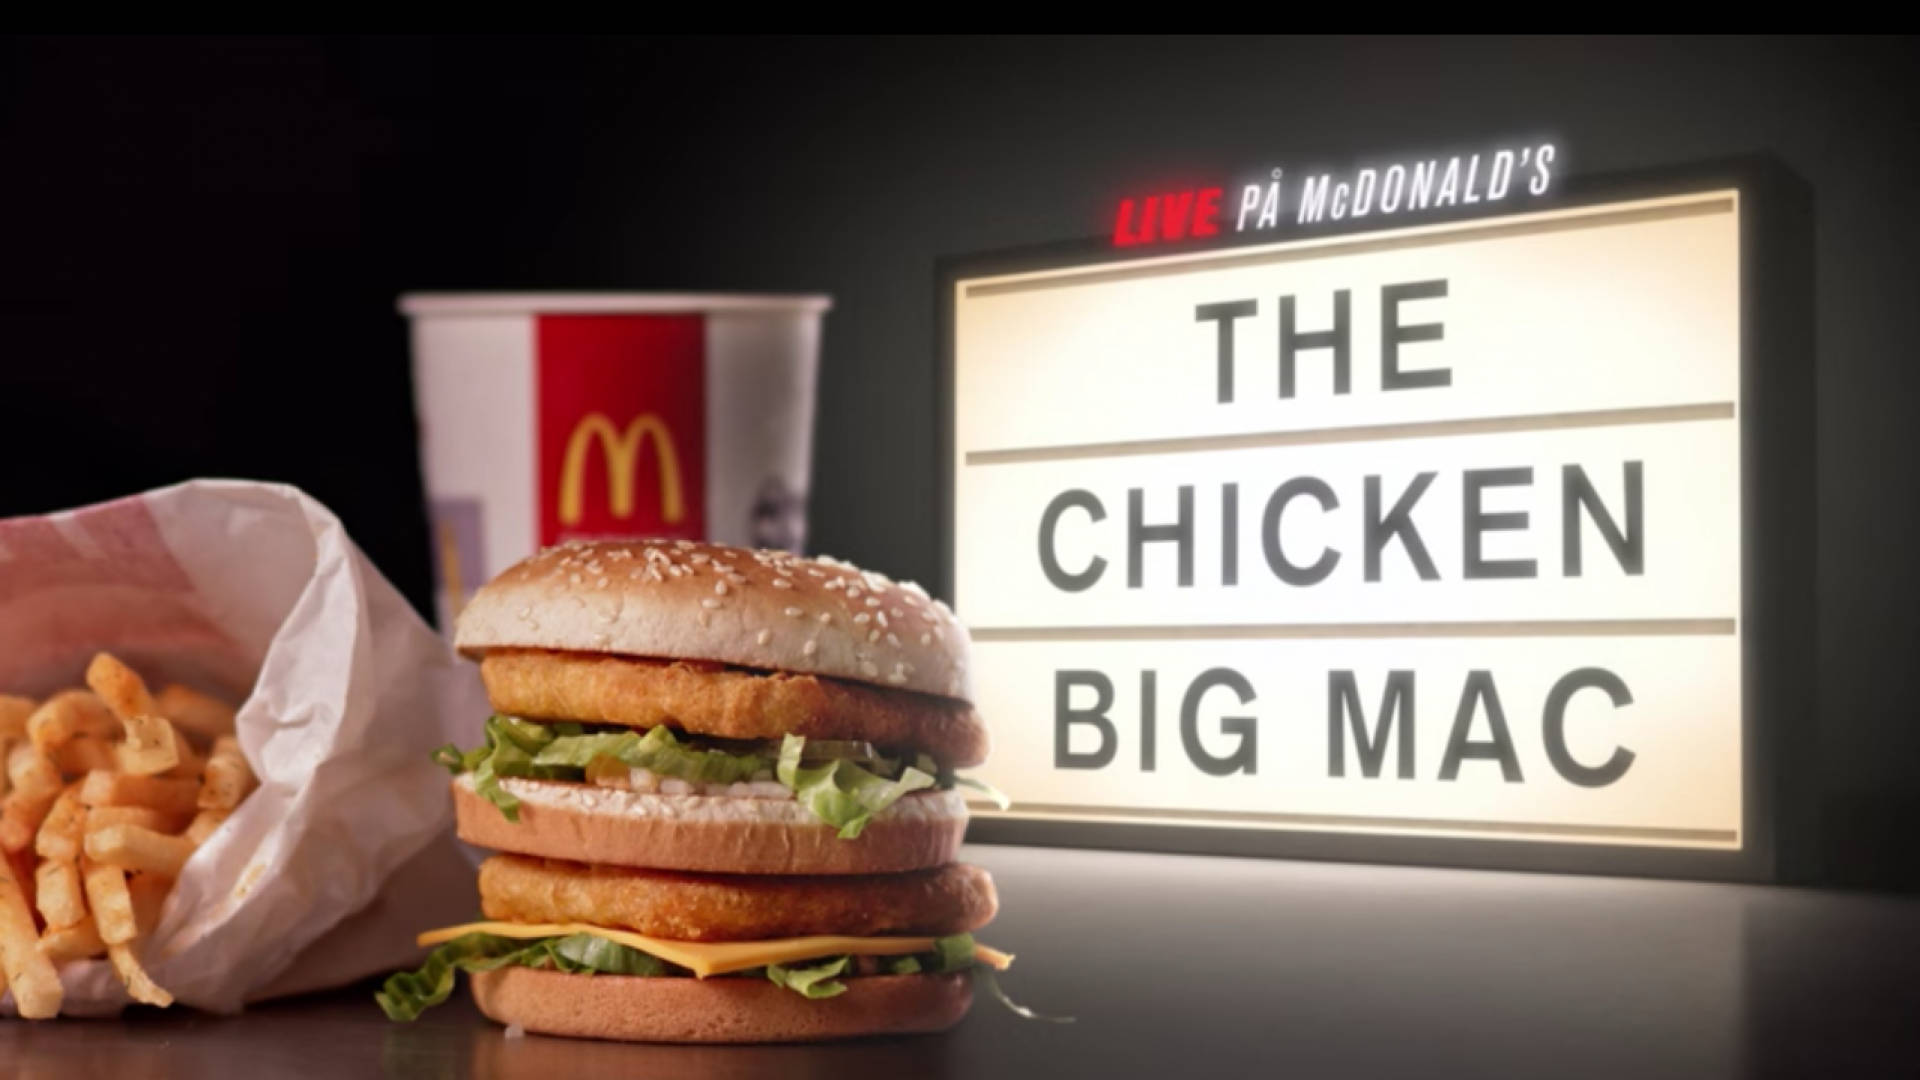 Mcdonald's The Chicken Big Mac